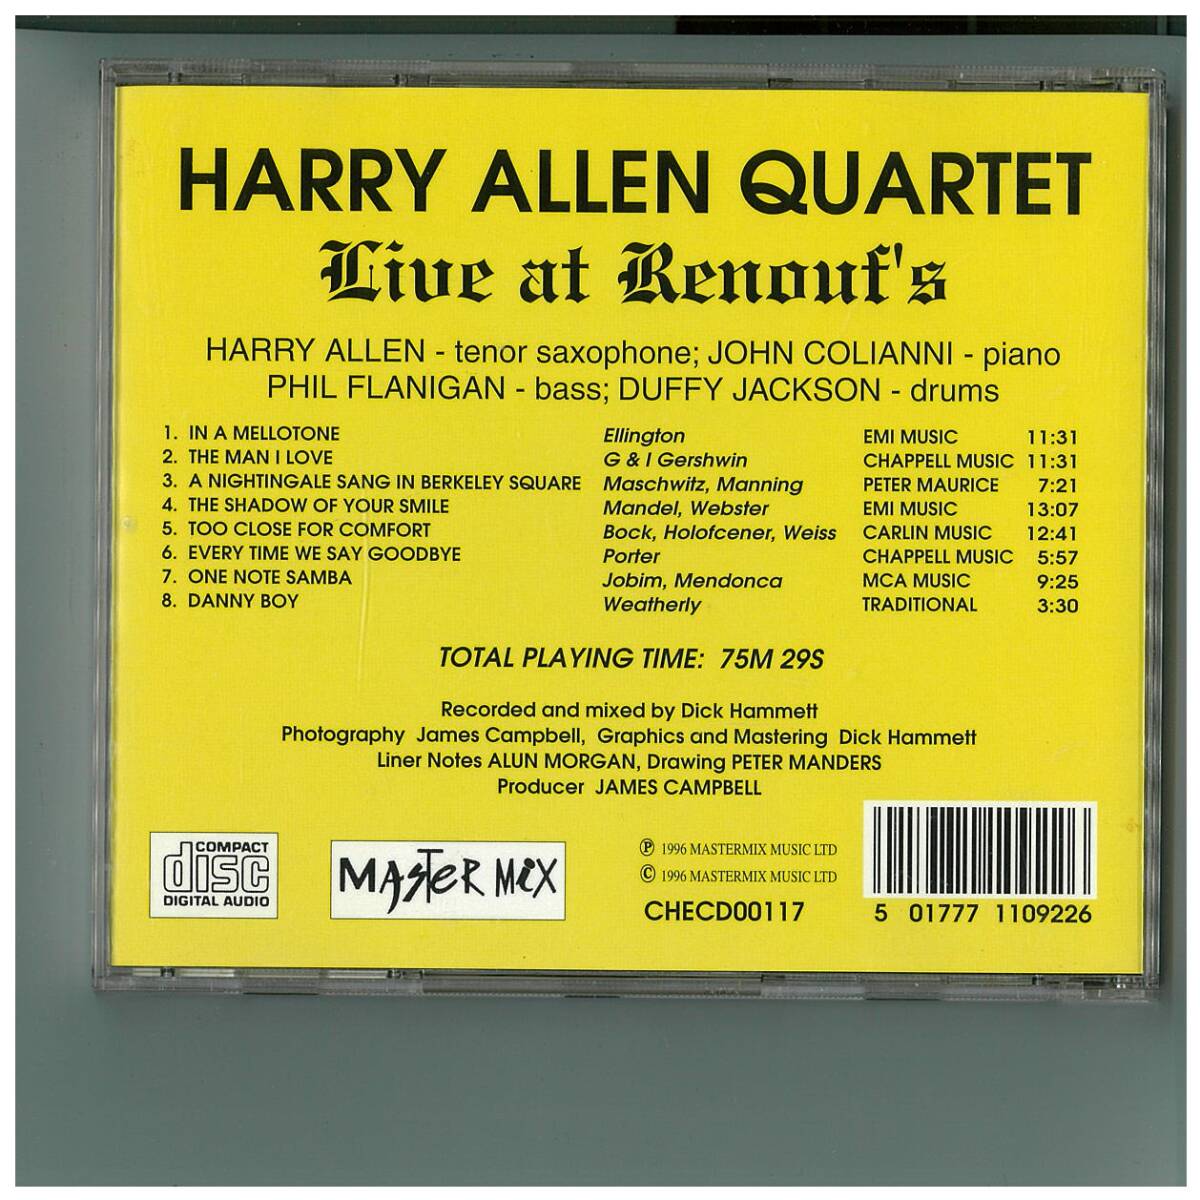 CD☆Harry Allen Quartet☆Live at Renouf's☆ハリー アレン☆CHECD00117_画像2